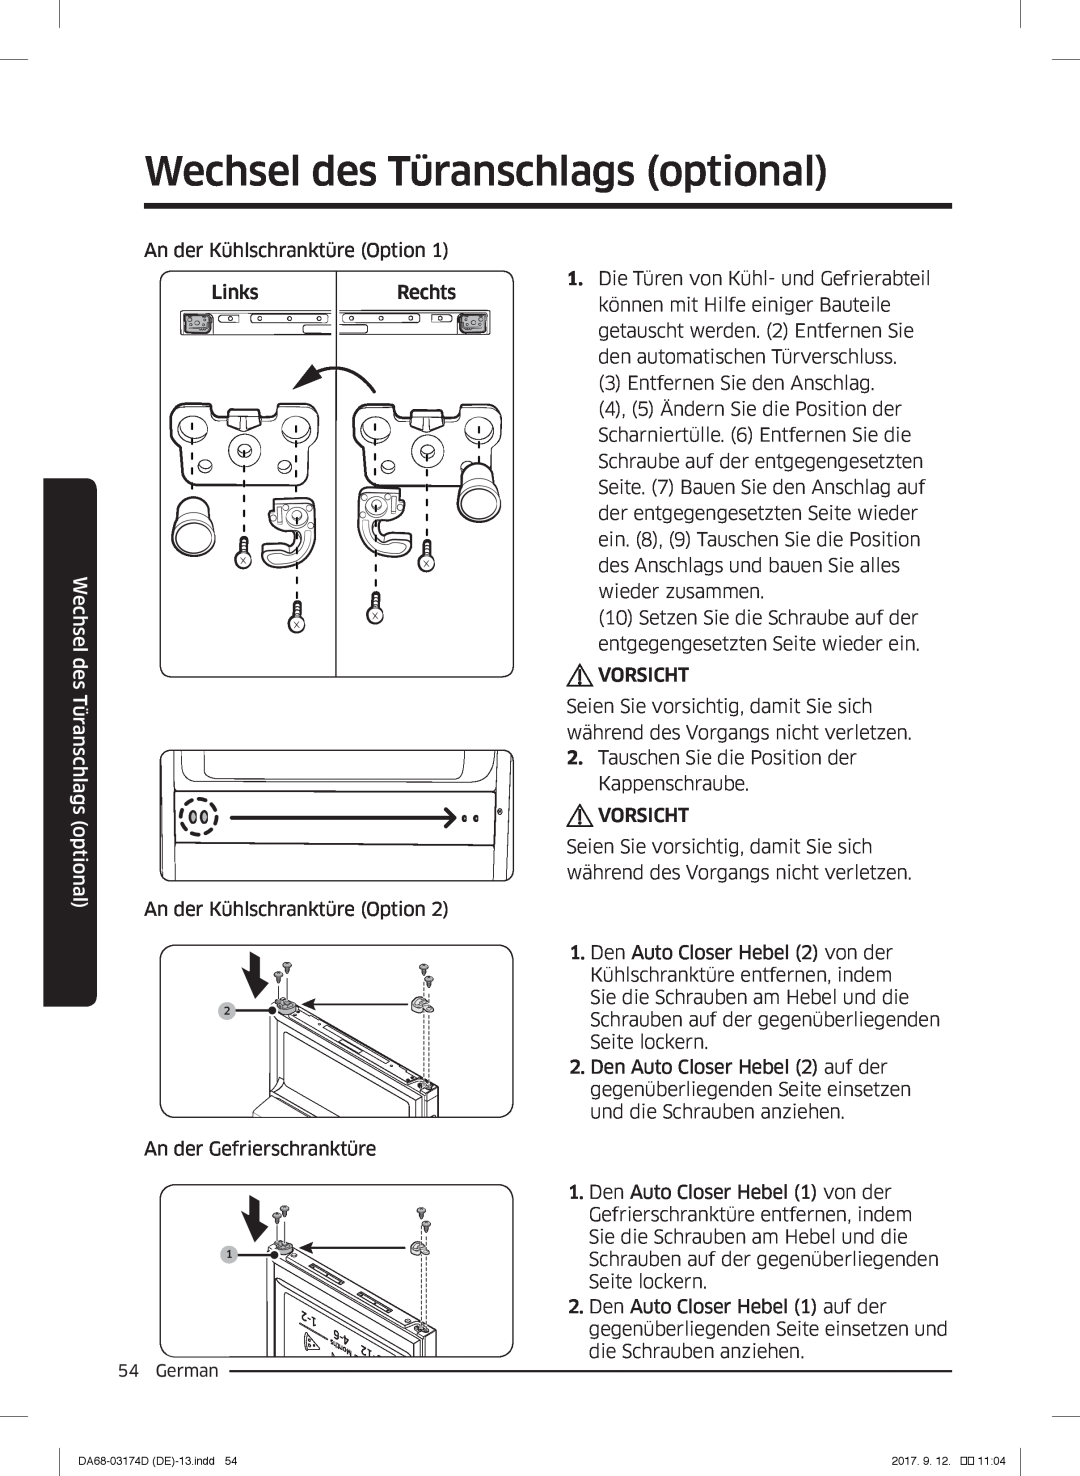 Samsung RB41J7734B1/EF Wechsel des Türanschlags optional, Wechseldes Türanschlagsoptional An der Kühlschranktüre Option 